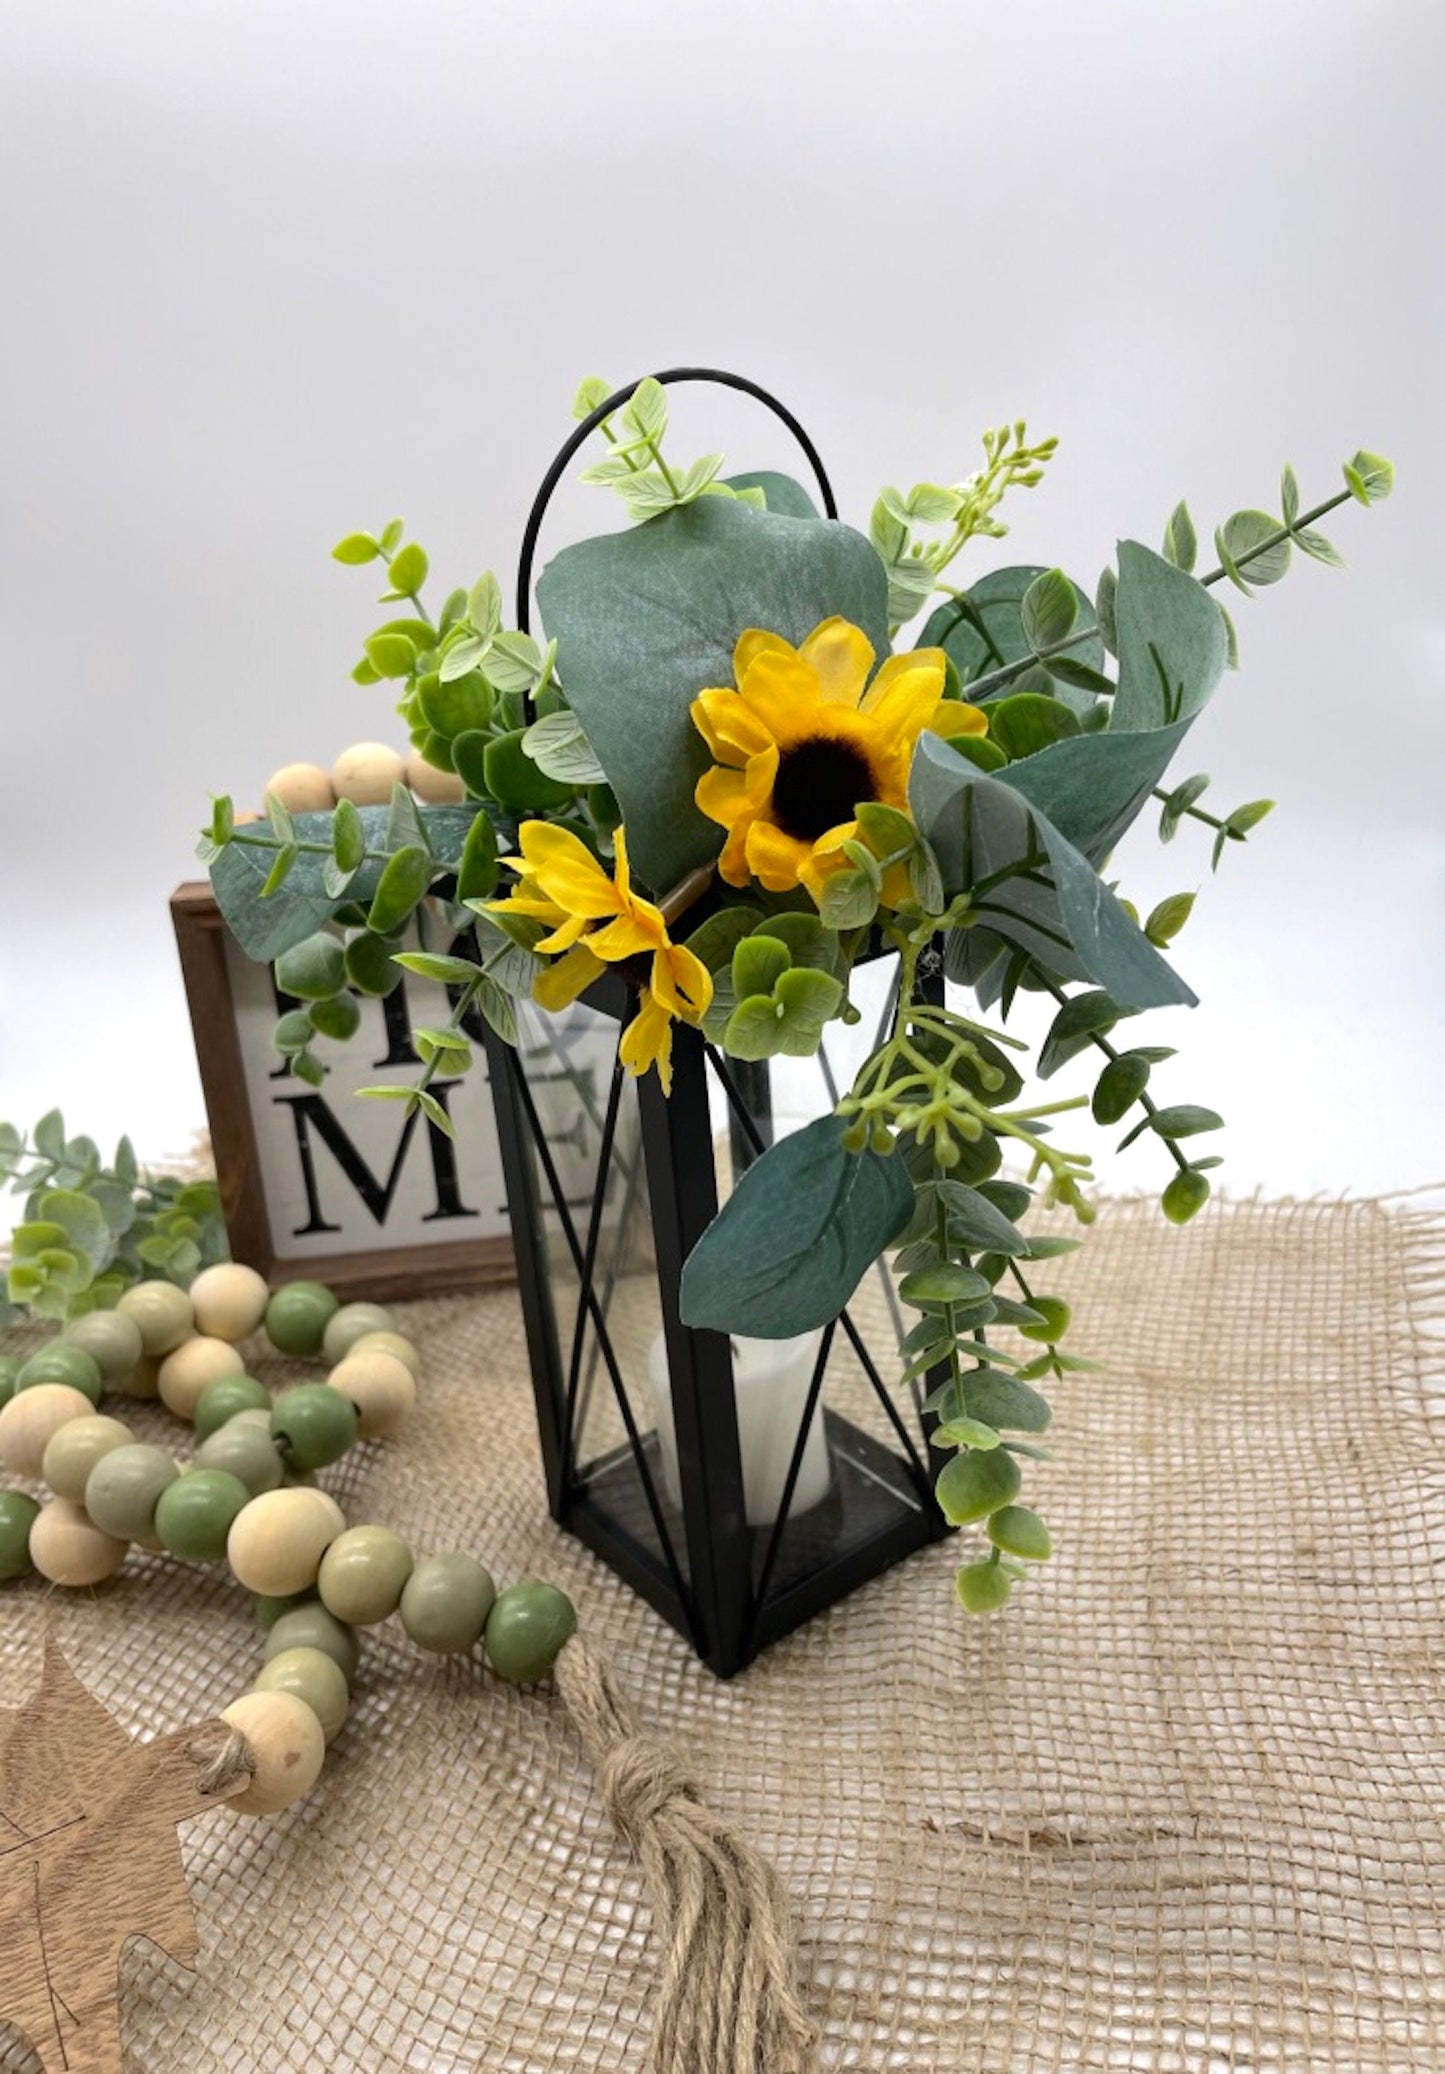 Tray Decor Set with Black Lantern, Sunflower Themed Decorative Tray